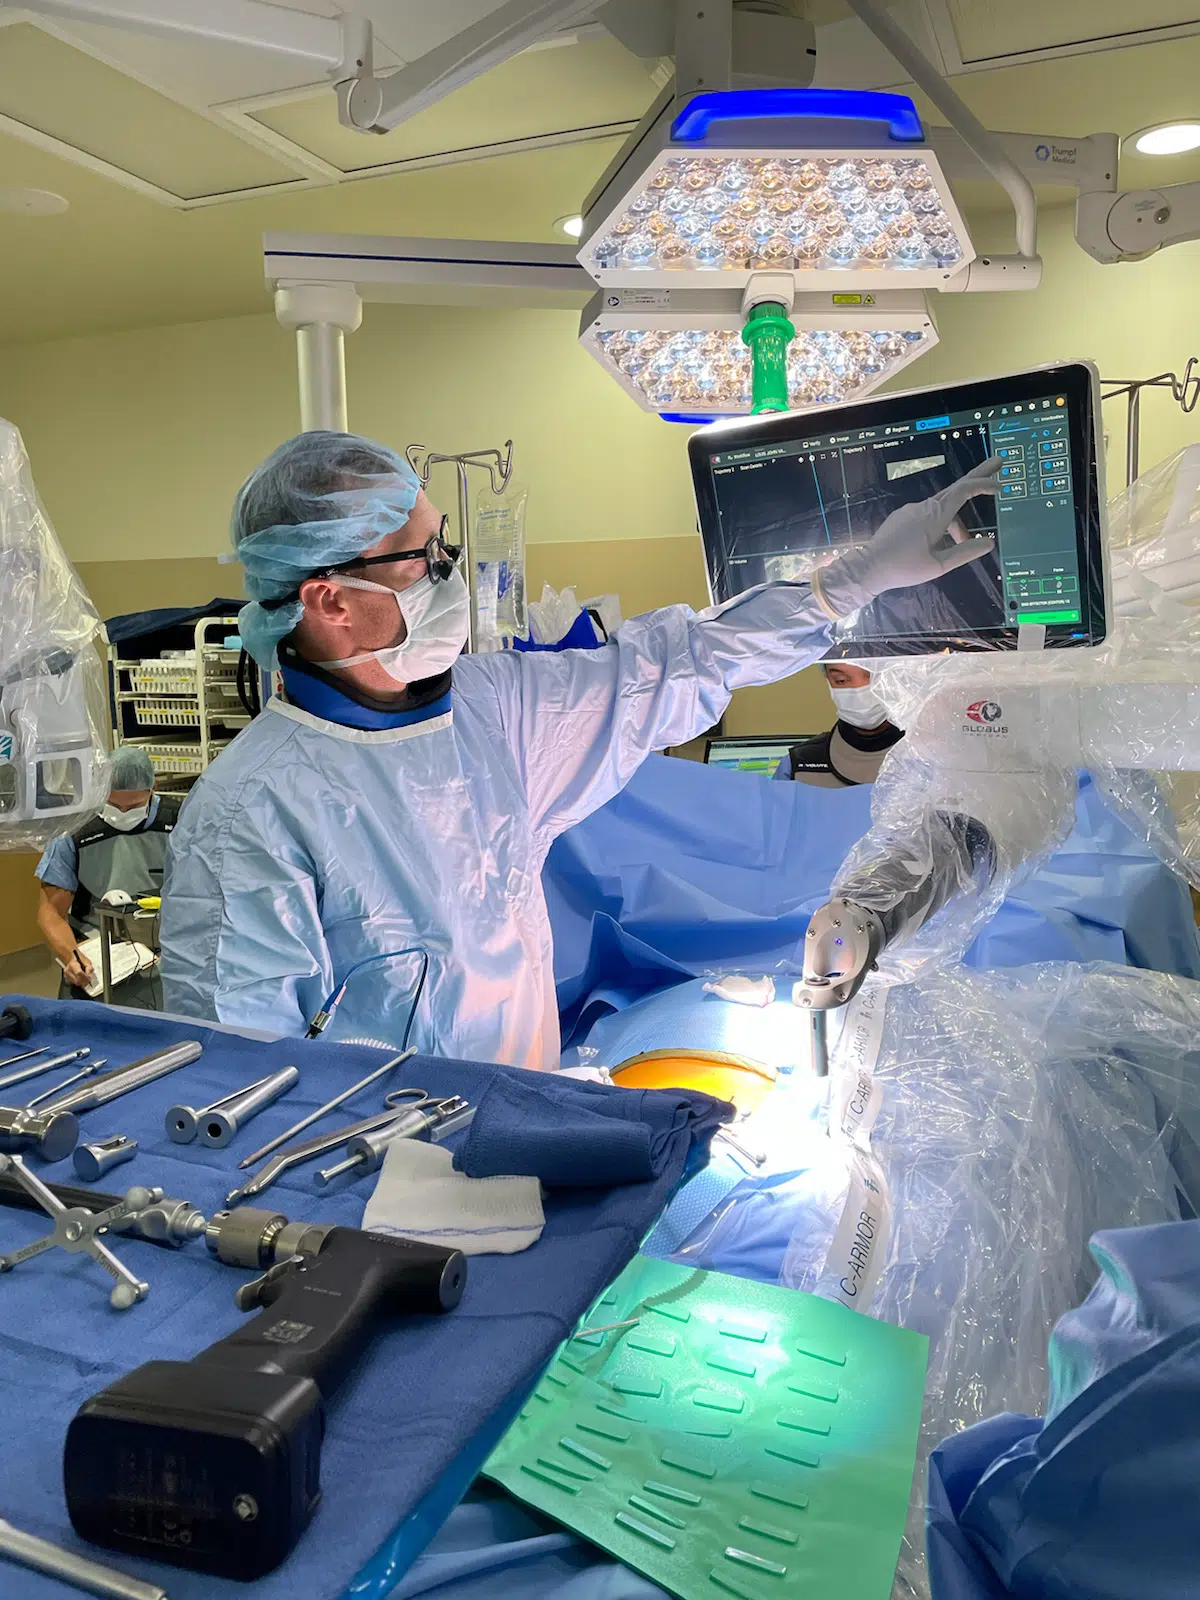 robotic spine surgery